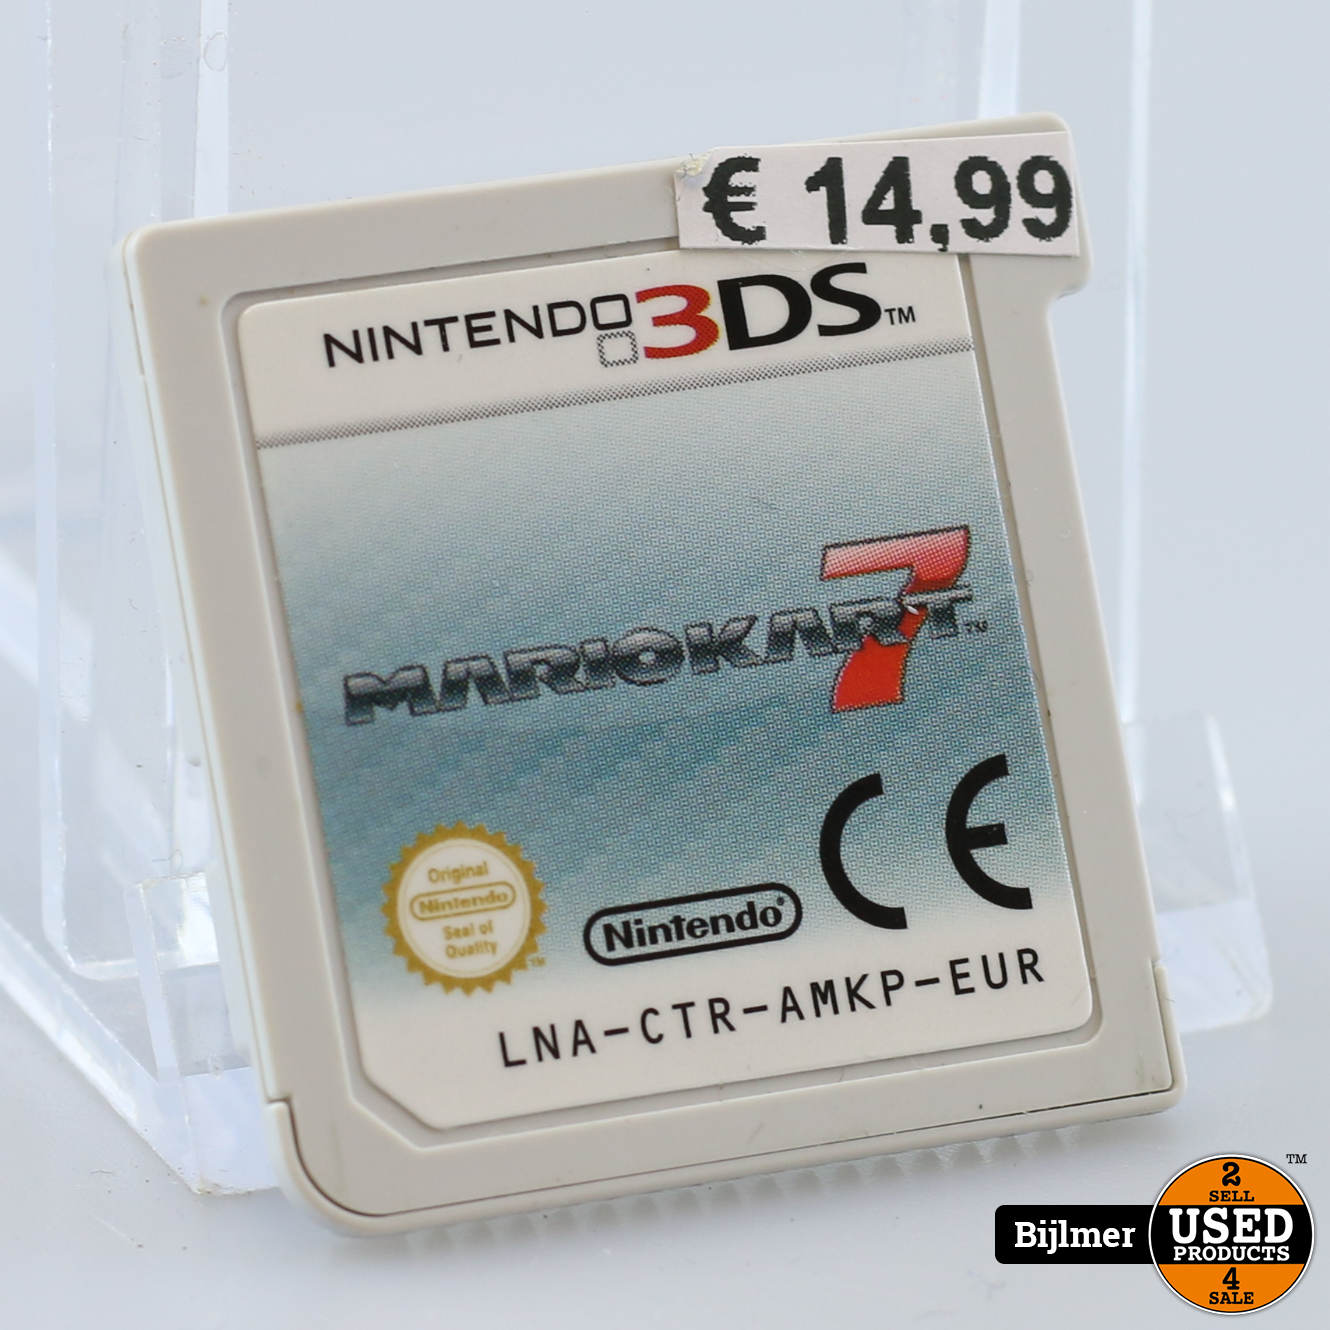 Vader Relatieve grootte Diagnostiseren Nintendo 3DS Game: Mario Kart 7 (losse disc) - Used Products Amsterdam  Bijlmer